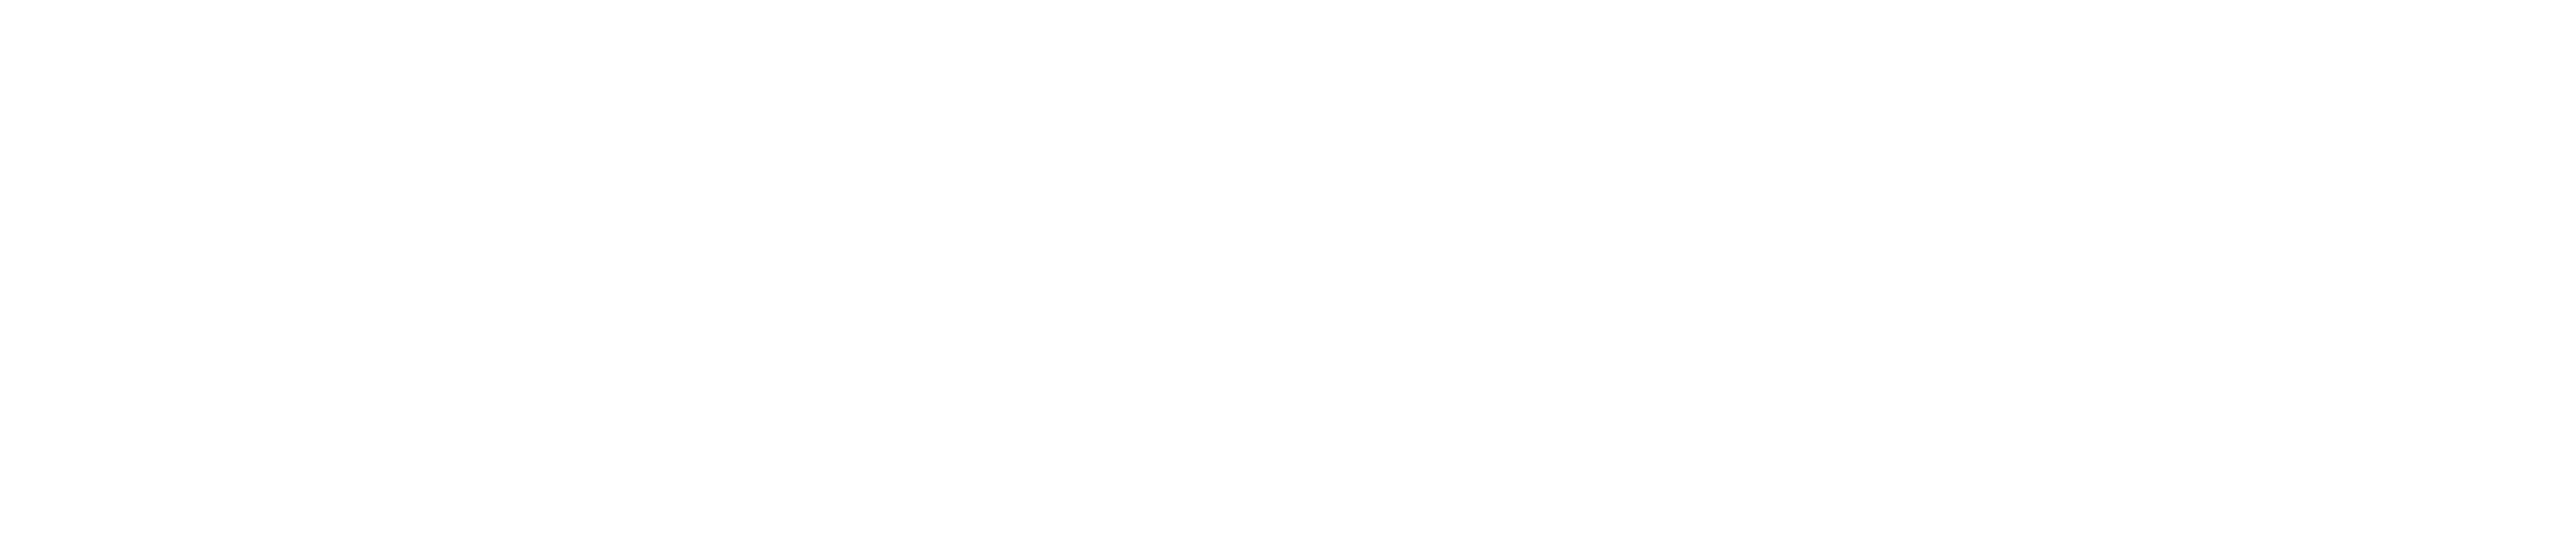 SpinLab Logo white